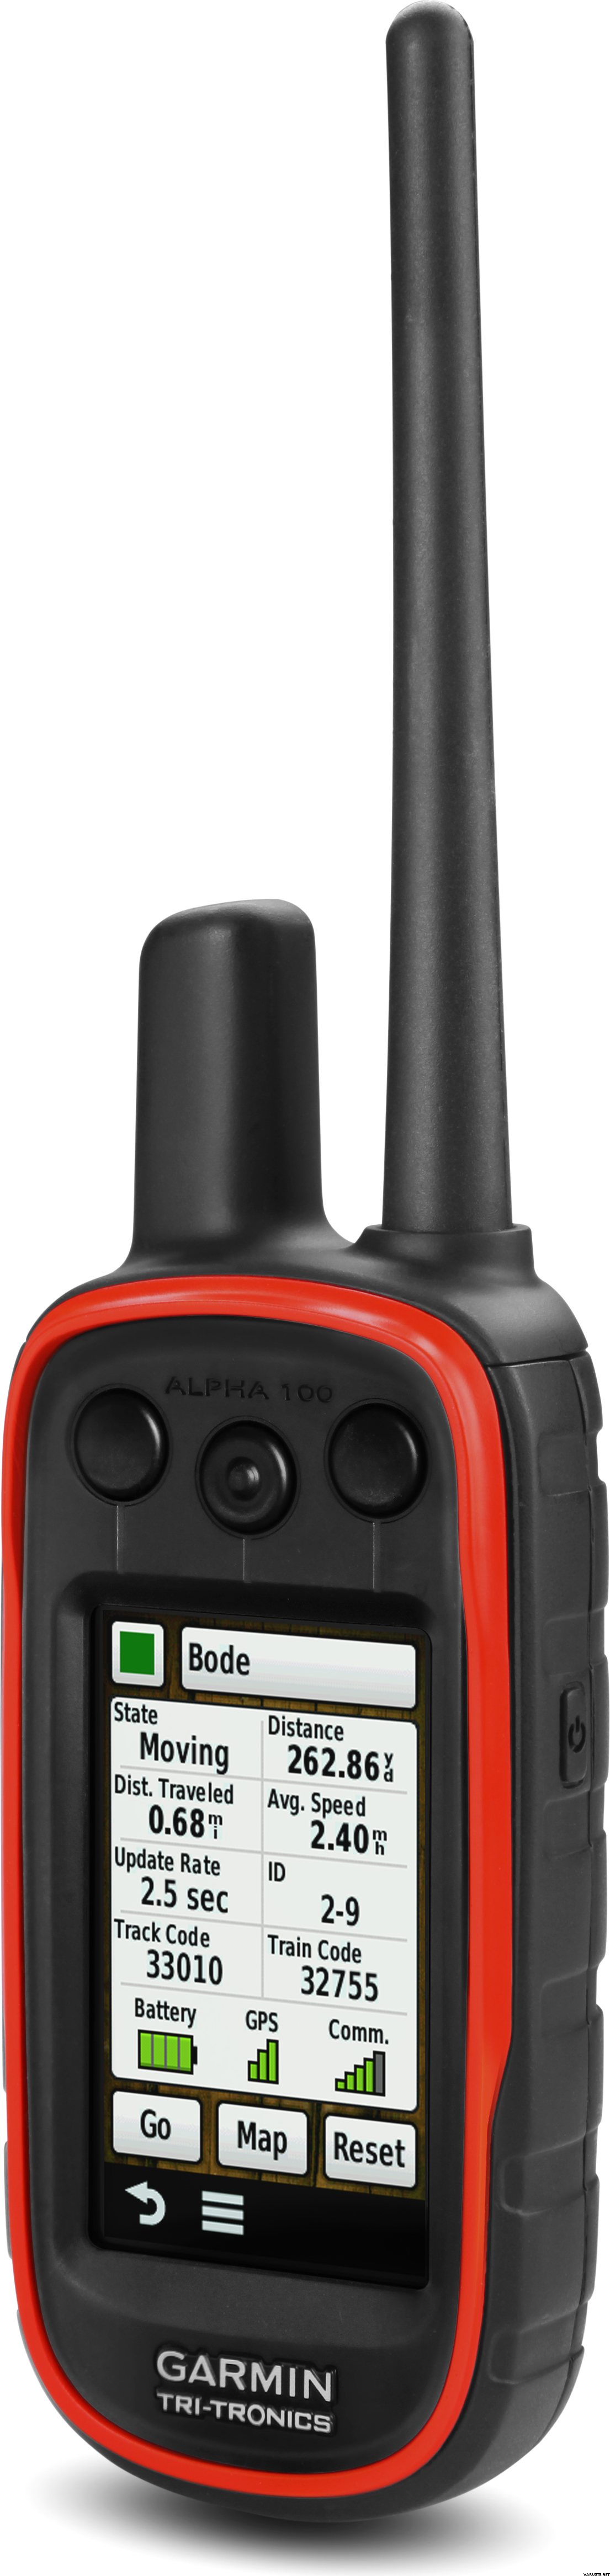 Garmin Alpha 100 + T5 Bundle (EU) | GPS 